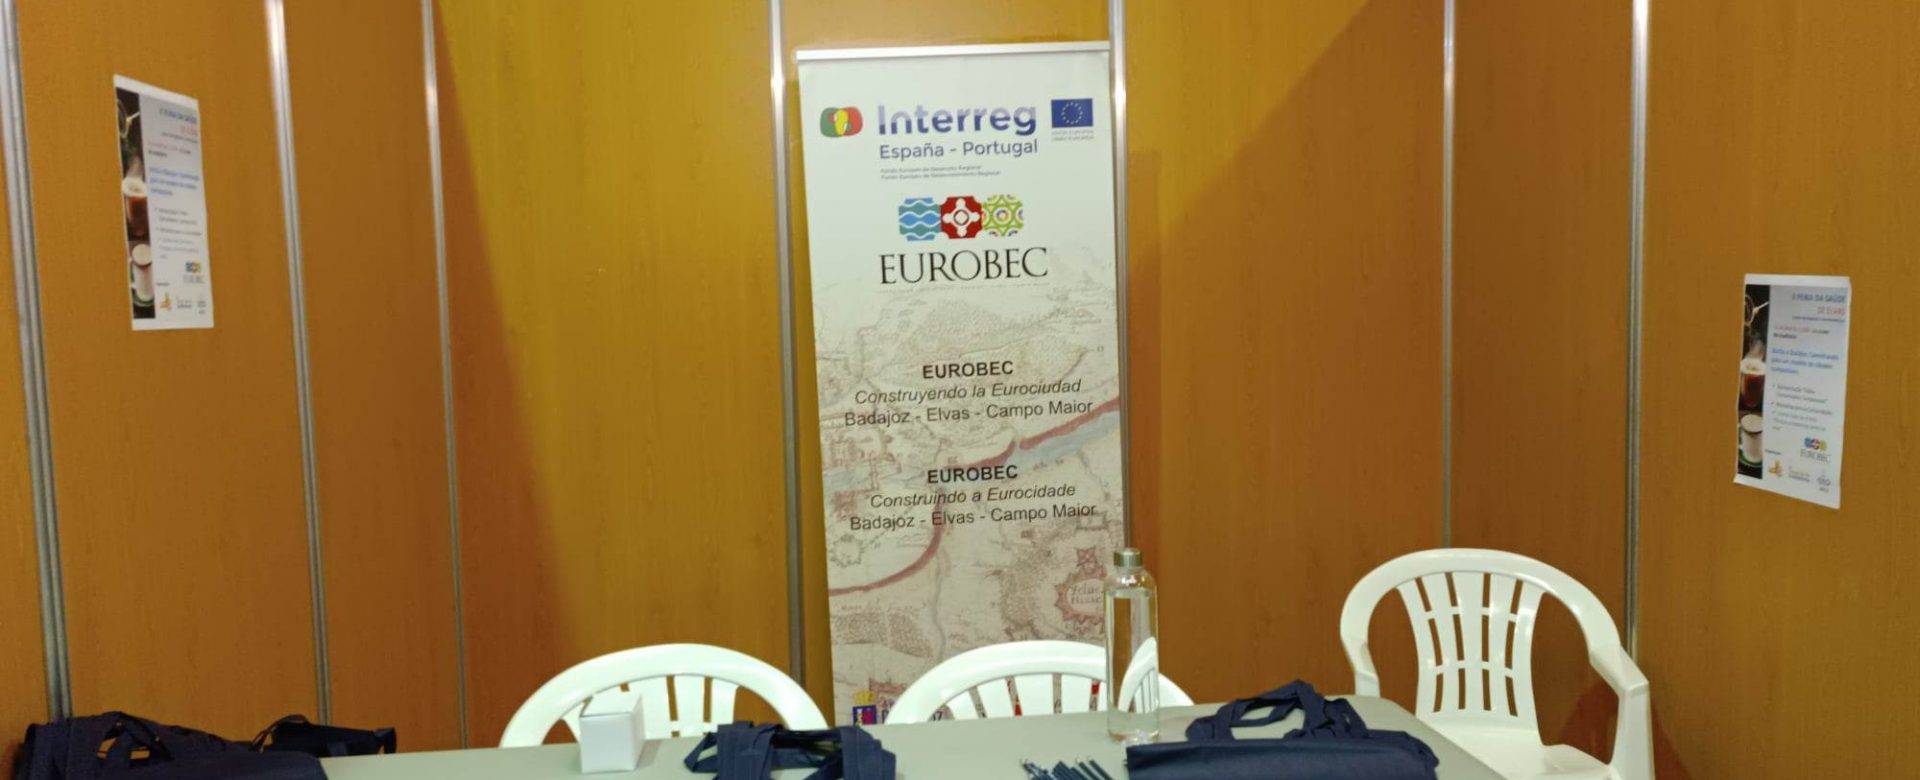 EuroBEC representada na